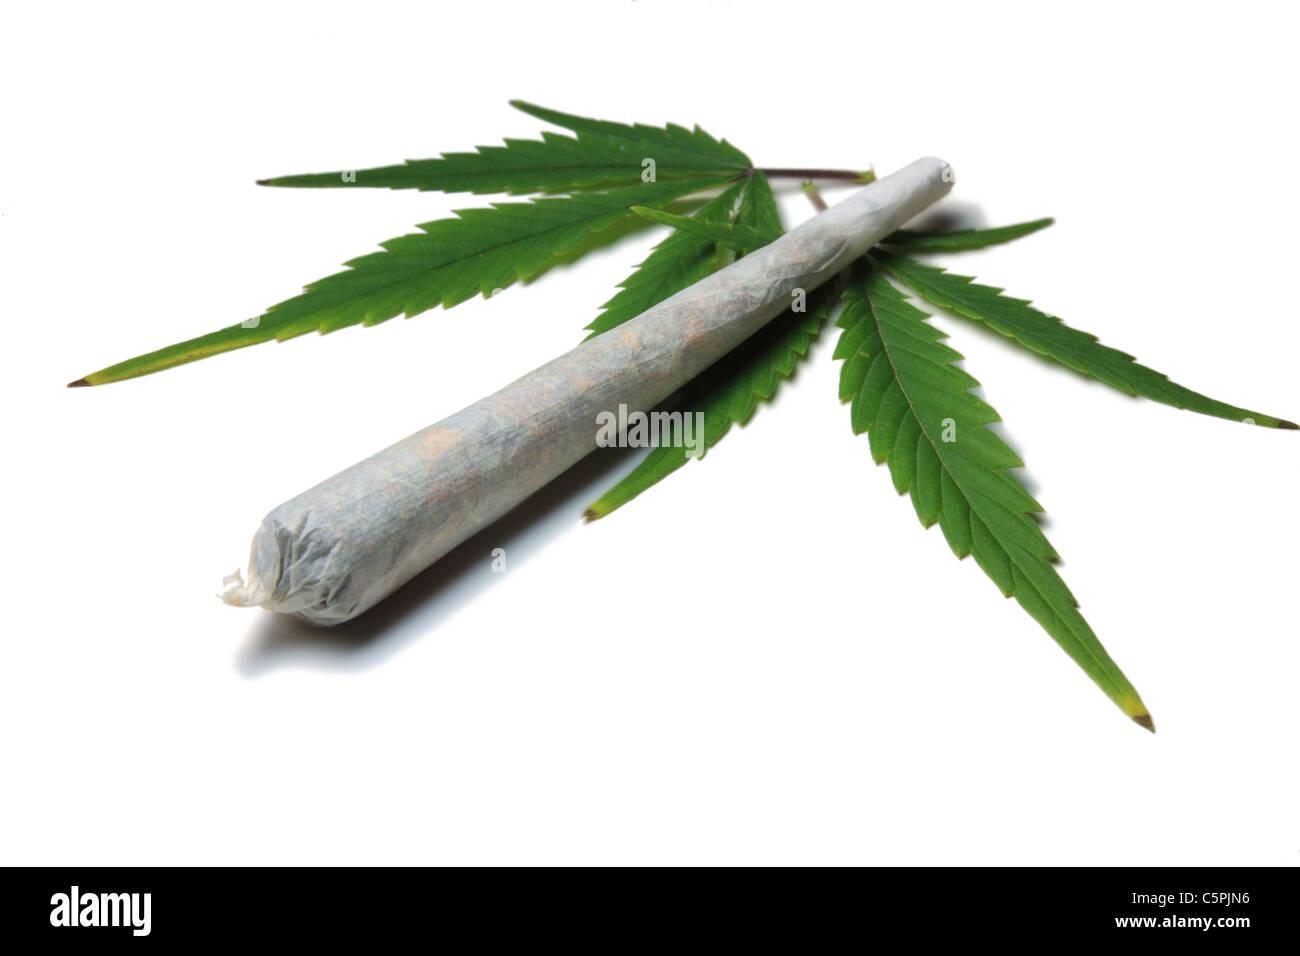 https://c8.alamy.com/comp/C5PJN6/marihuana-cigarette-with-cannabis-leafs-isolated-C5PJN6.jpg